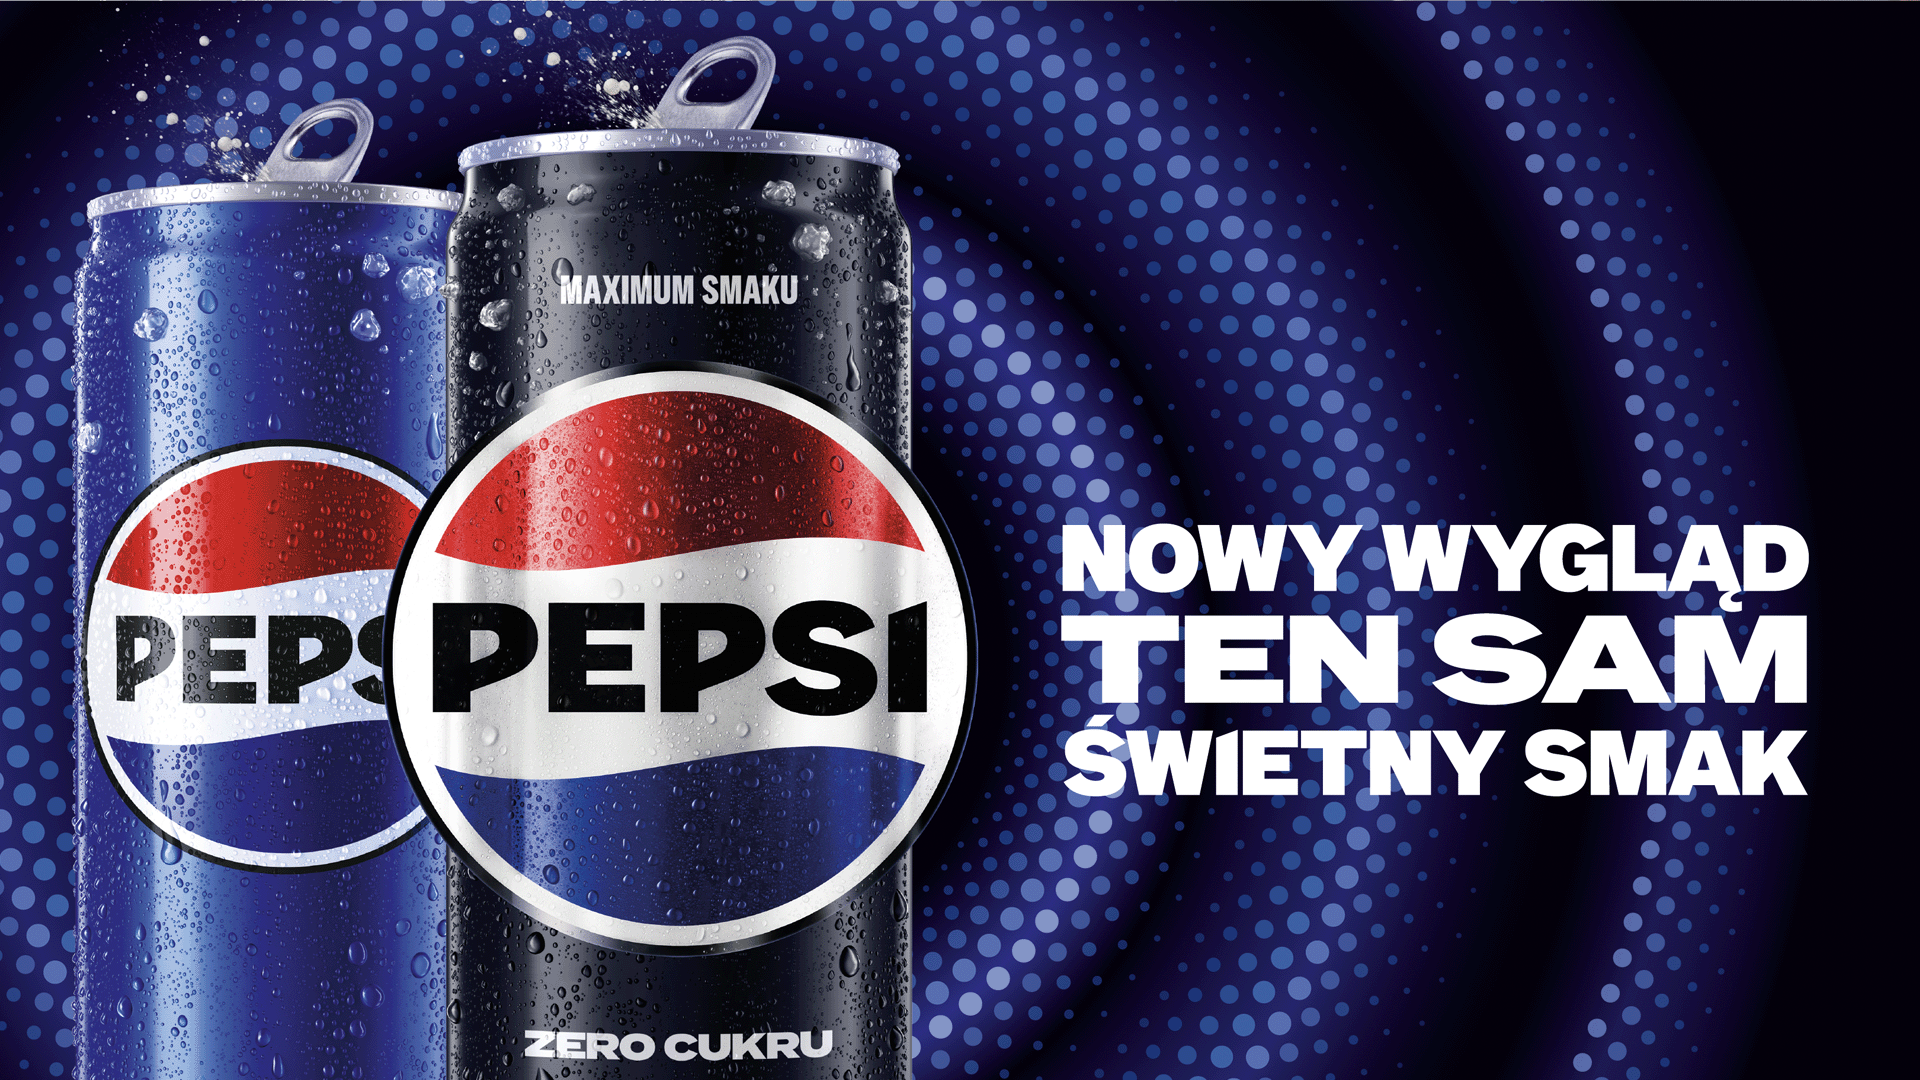 Pepsi zaprezentowało nową kampanię Pepsi MEDIARUN.COM PEPSI COLA KAMPANIA REKLAMOWA V1